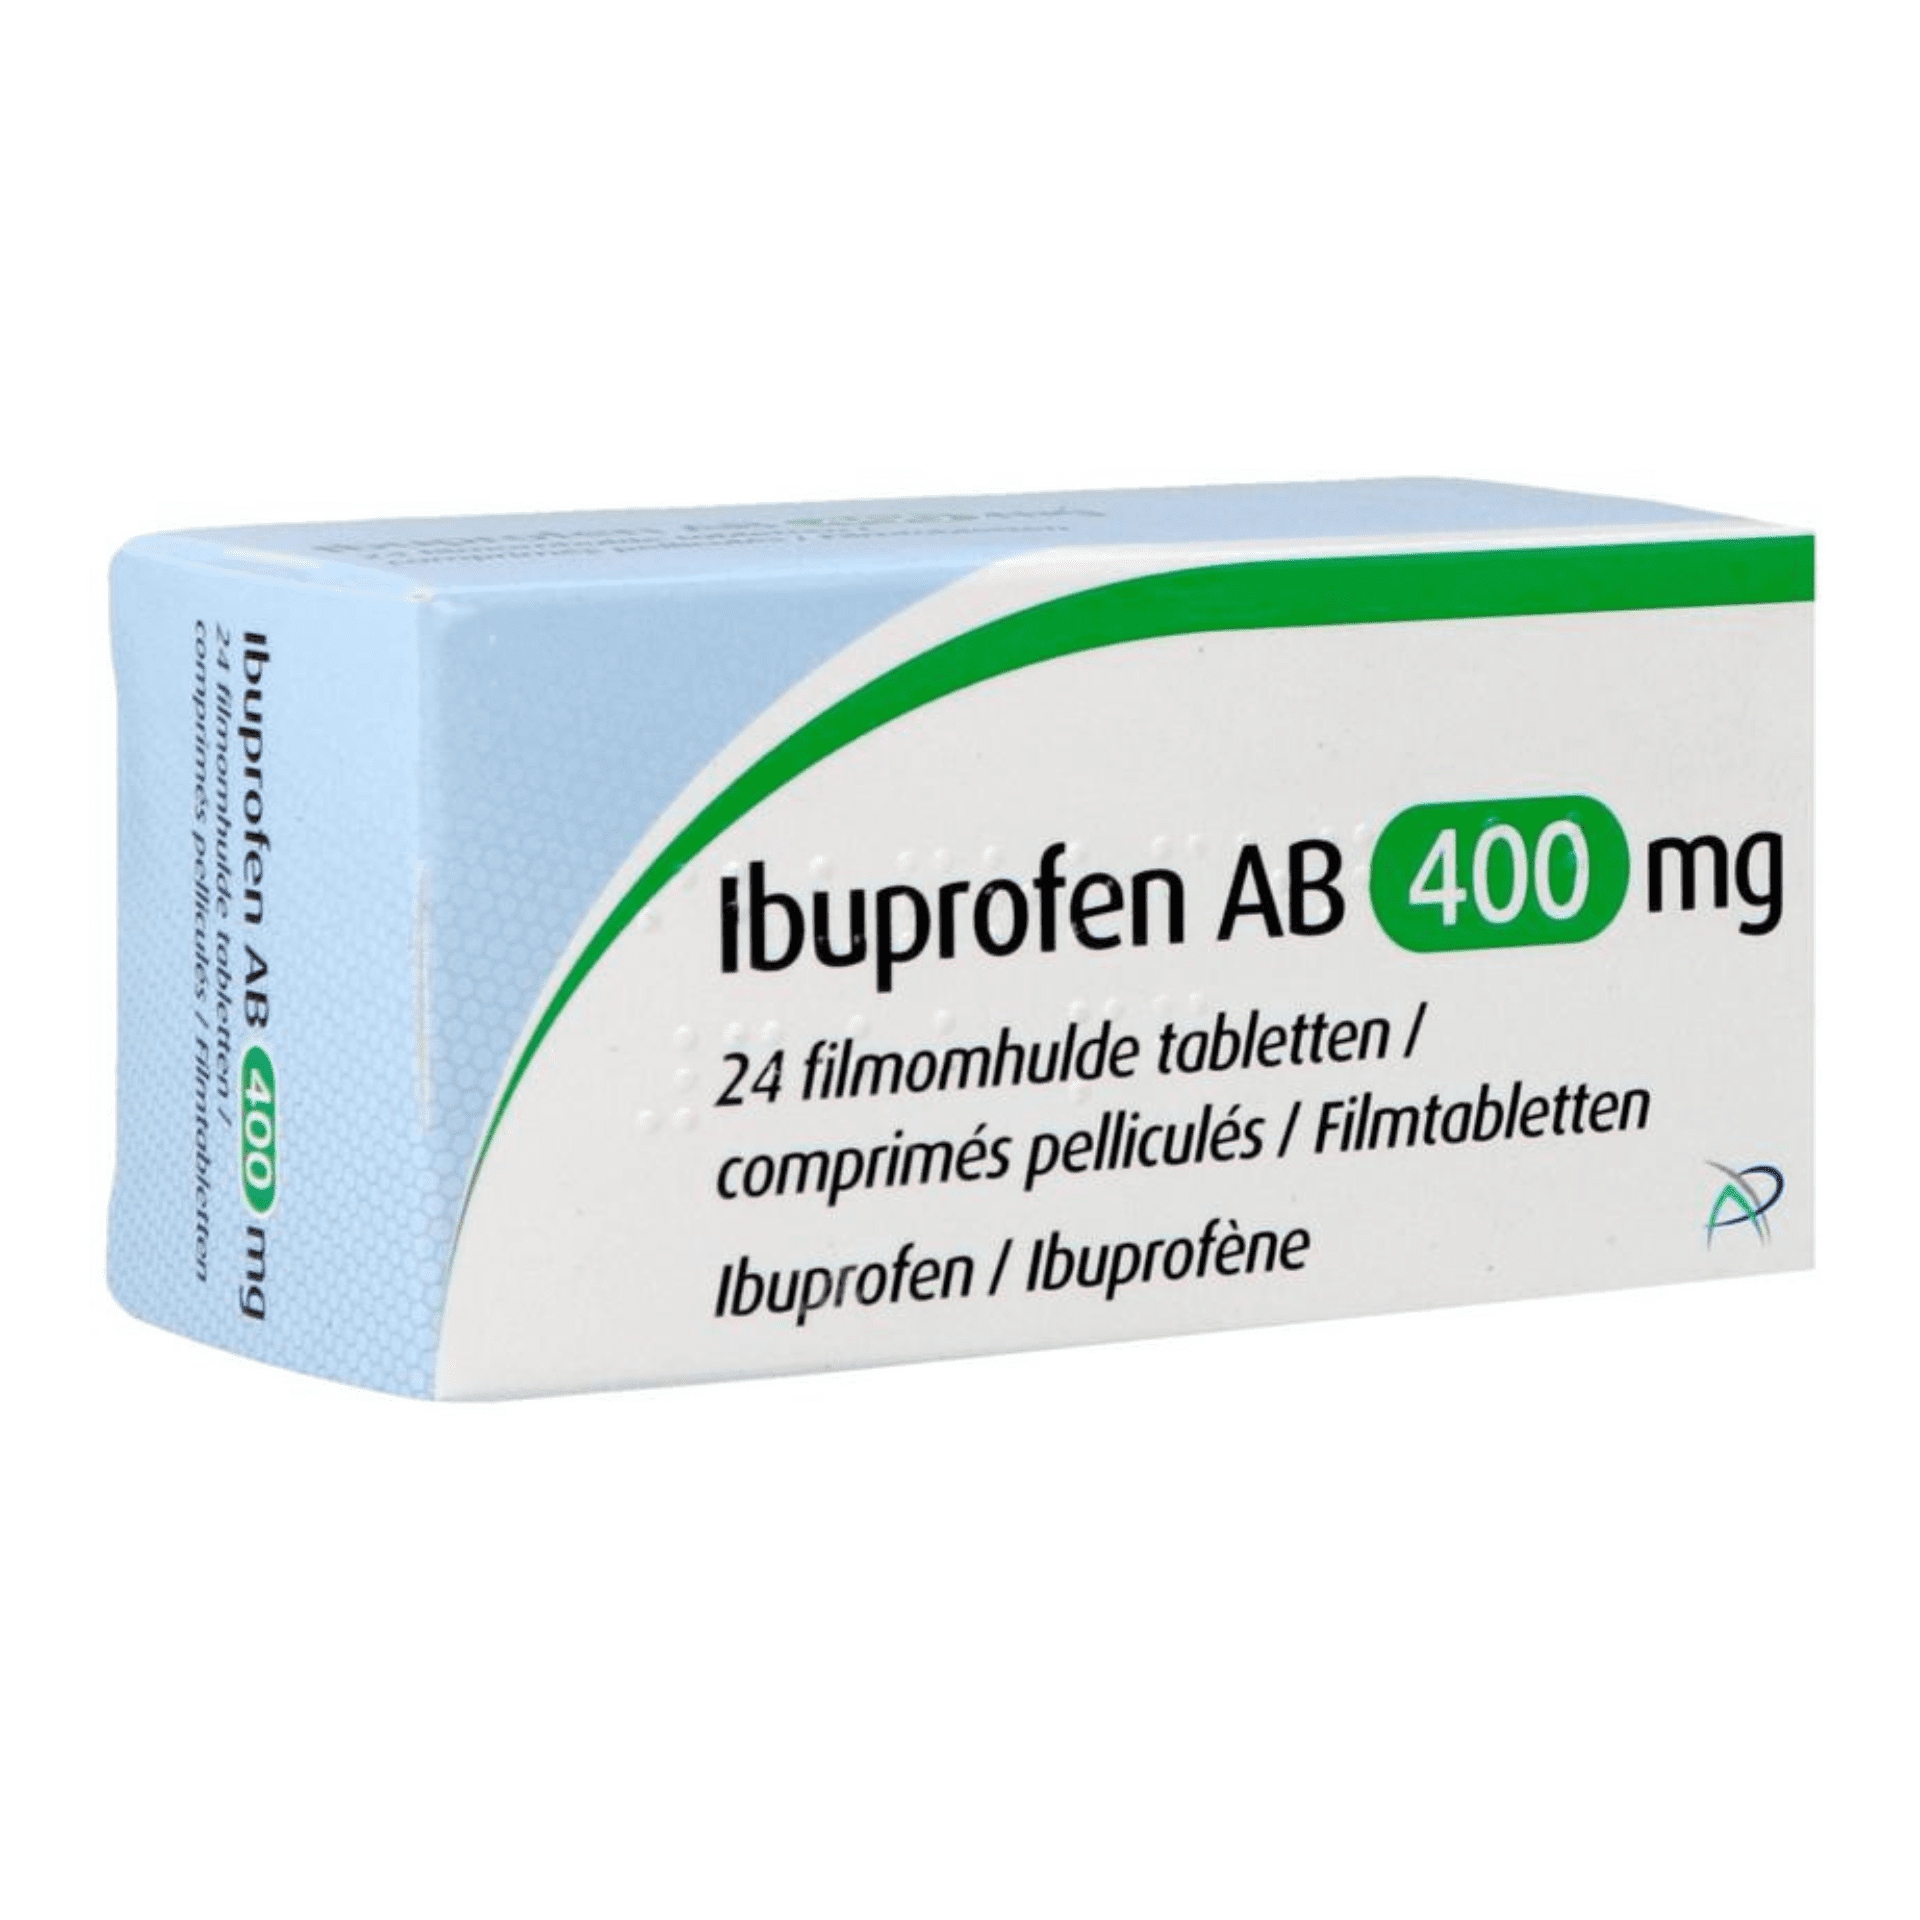 Ibuprofen AB 400mg Filmomhulde Tabletten 